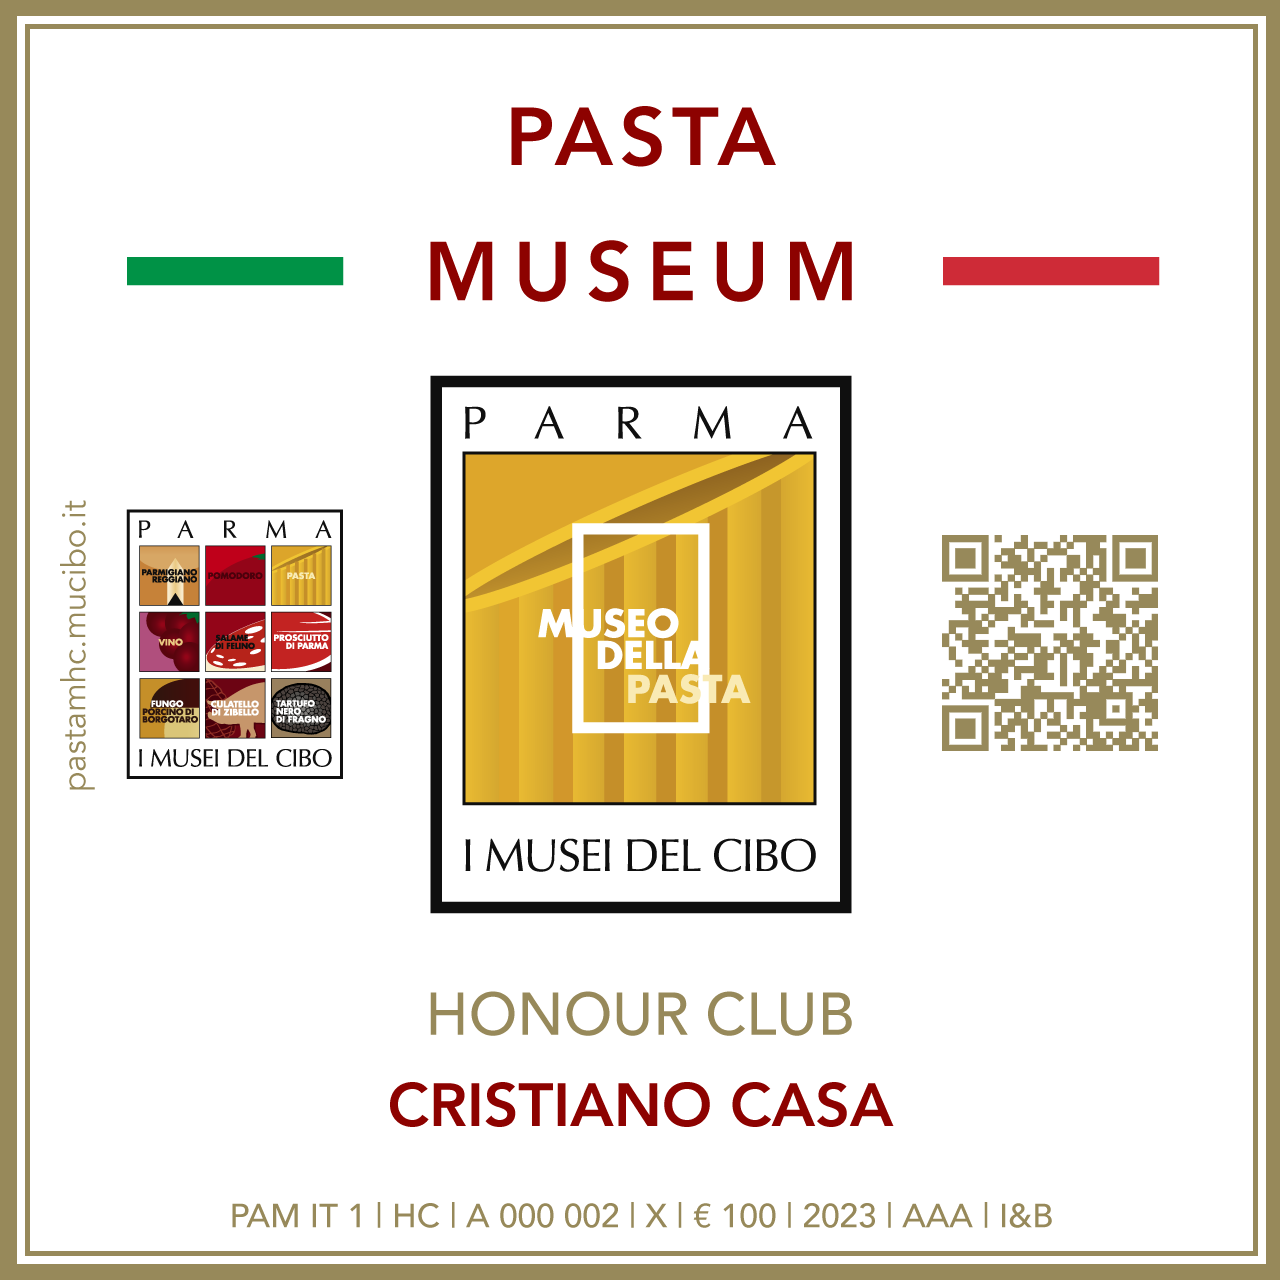 Pasta Museum Honour Club - Token Id A 000 002 - CRISTIANO CASA